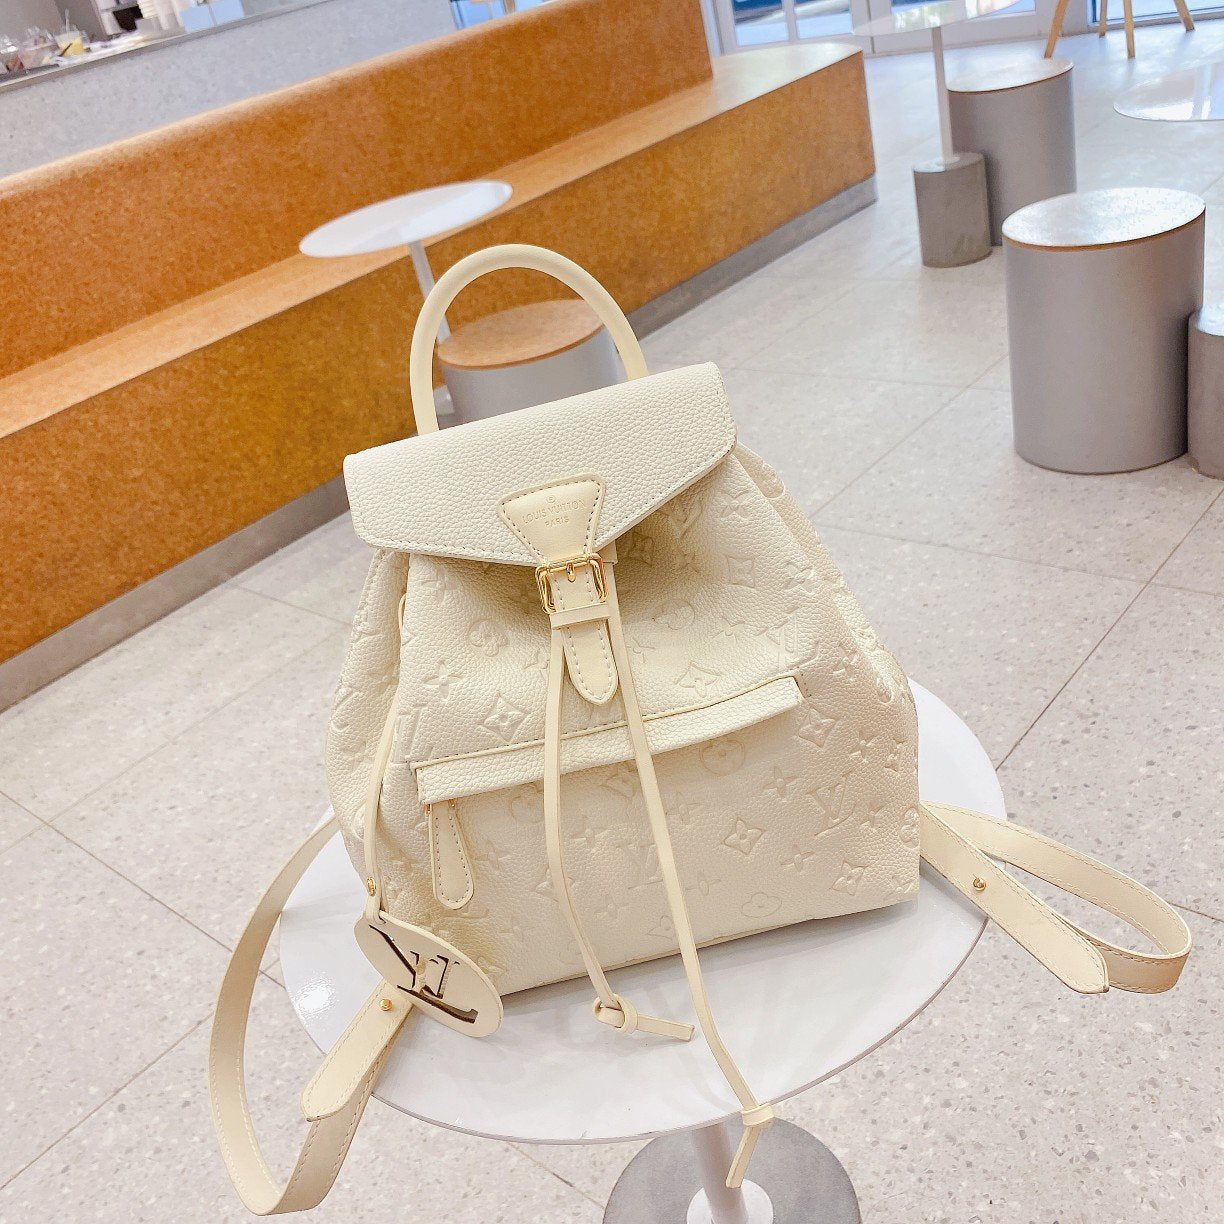 LV Louis Vuitton Shoulder Bag Lightwight Backpack Womens Mens Bag Travel Bags Suitcase Getaway Trave